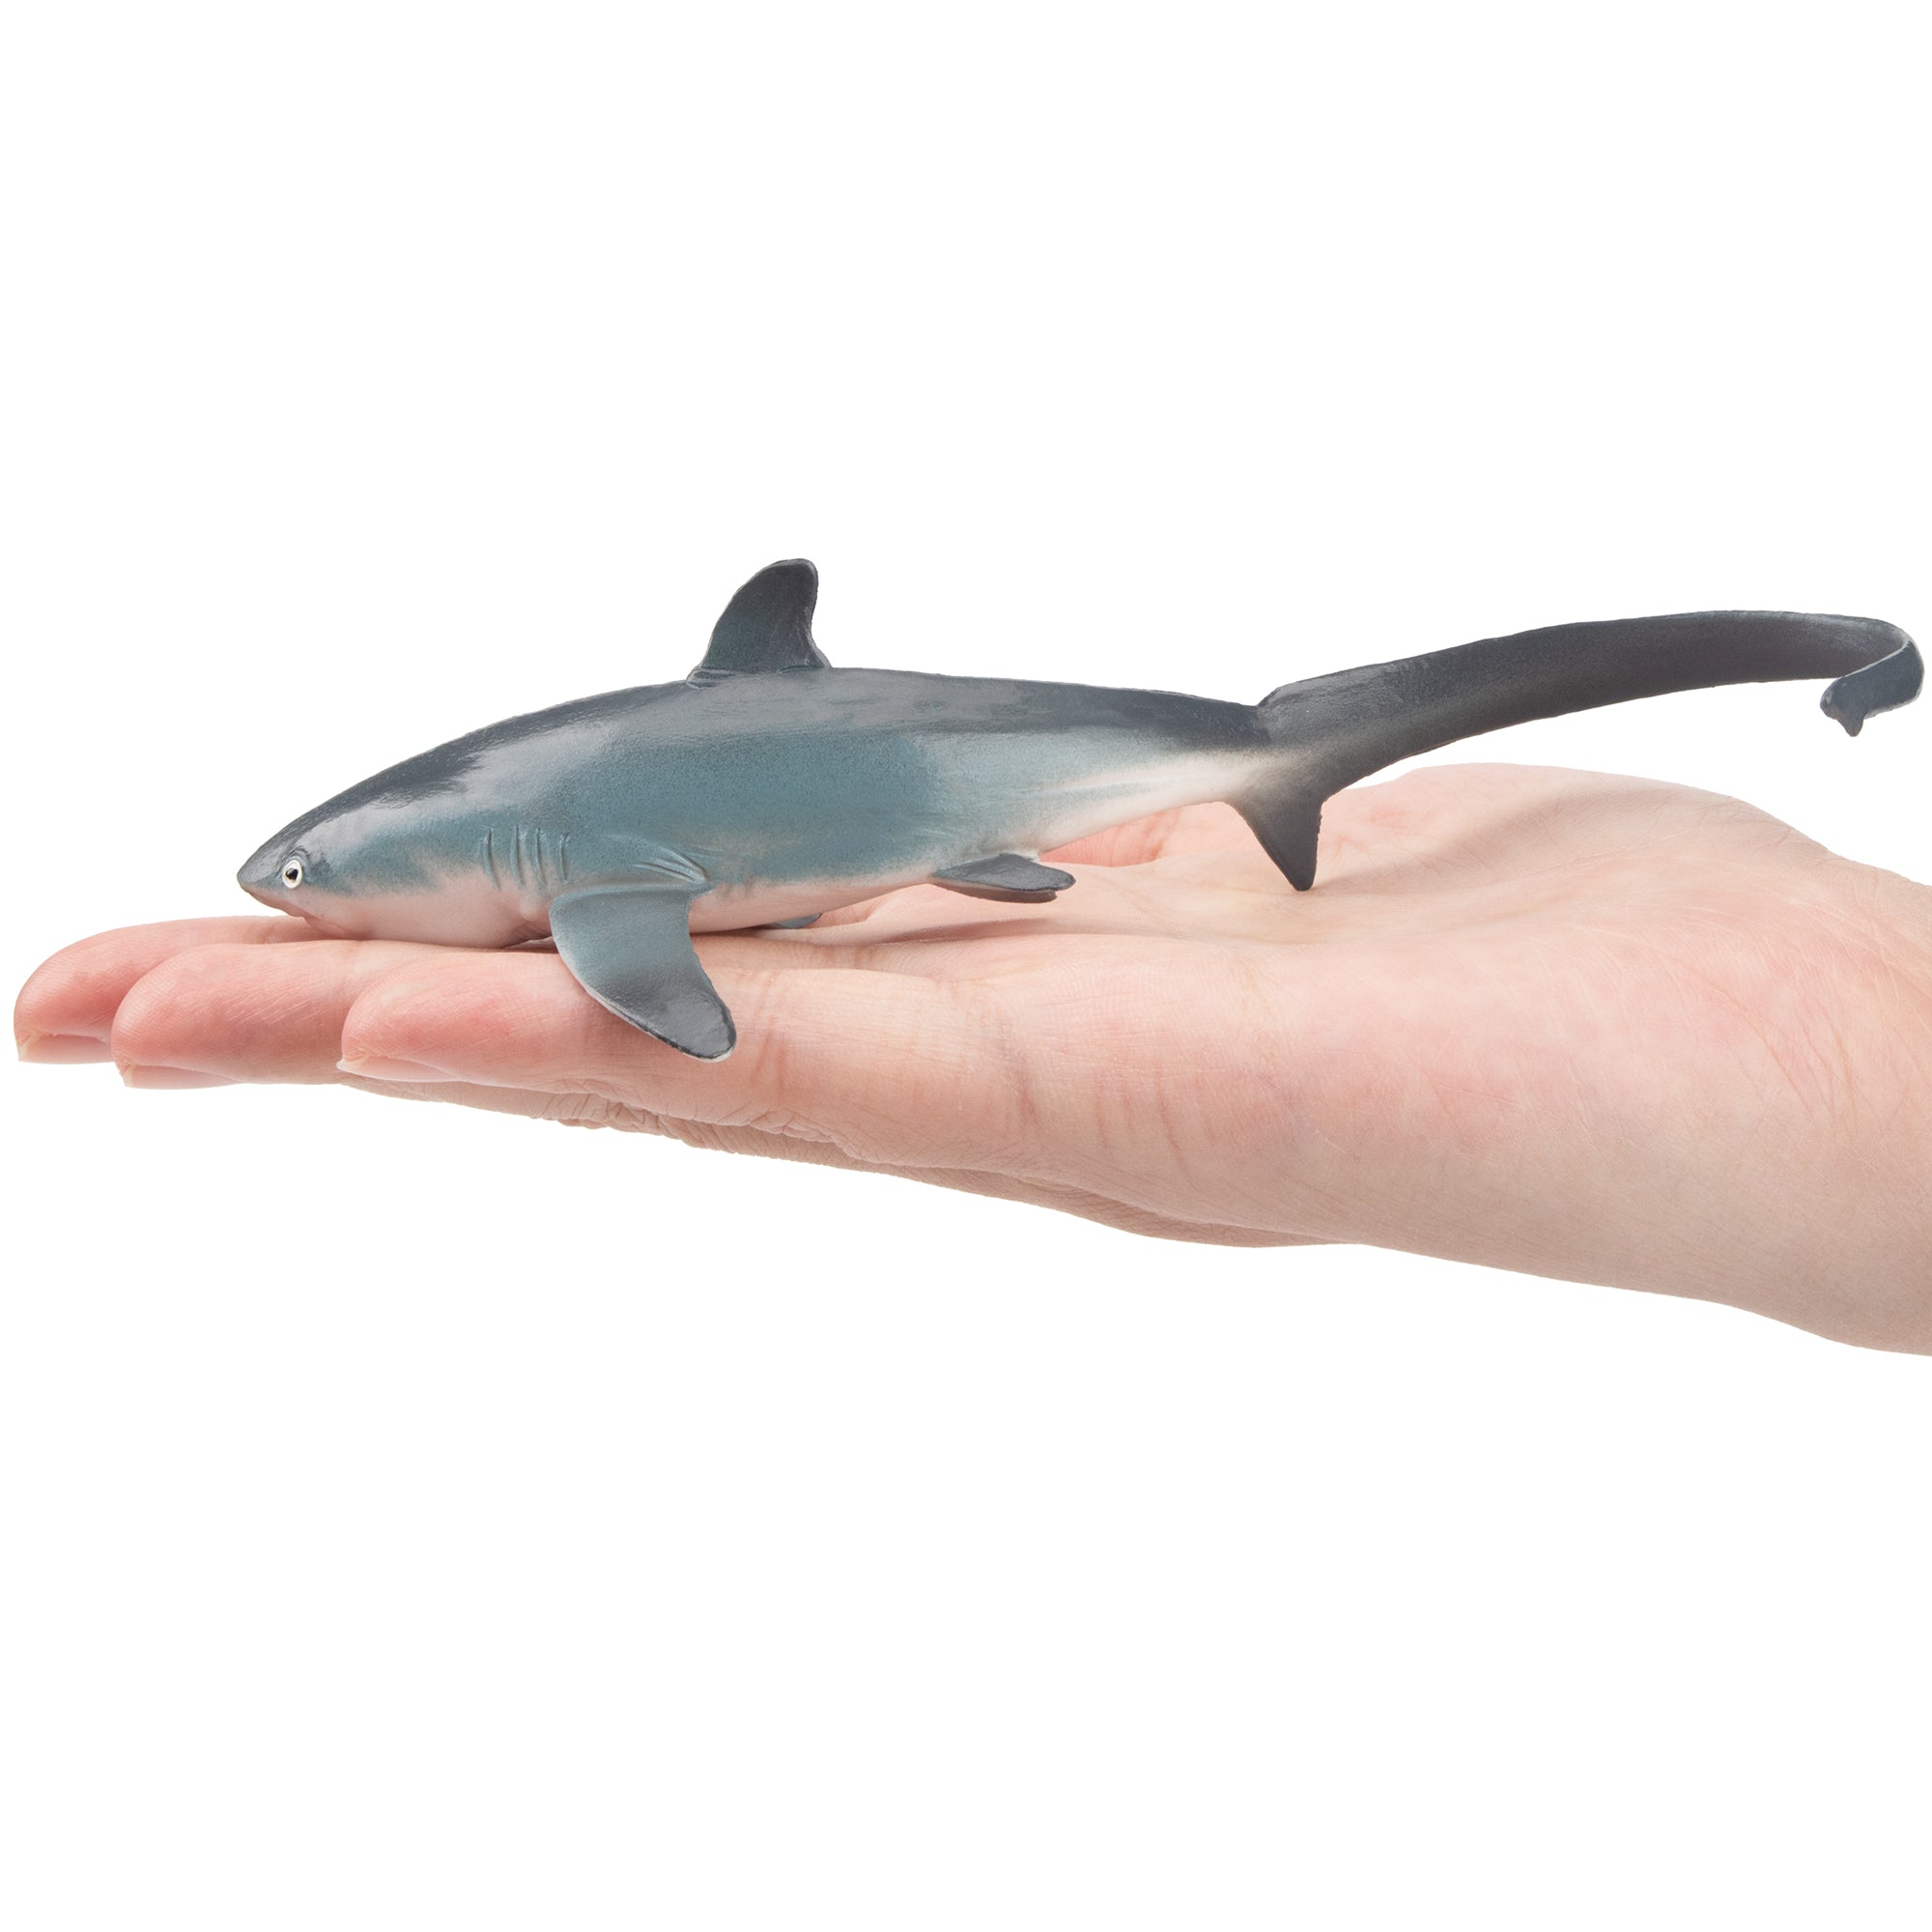 Toymany Thresher Shark Figurine Toy-on hand